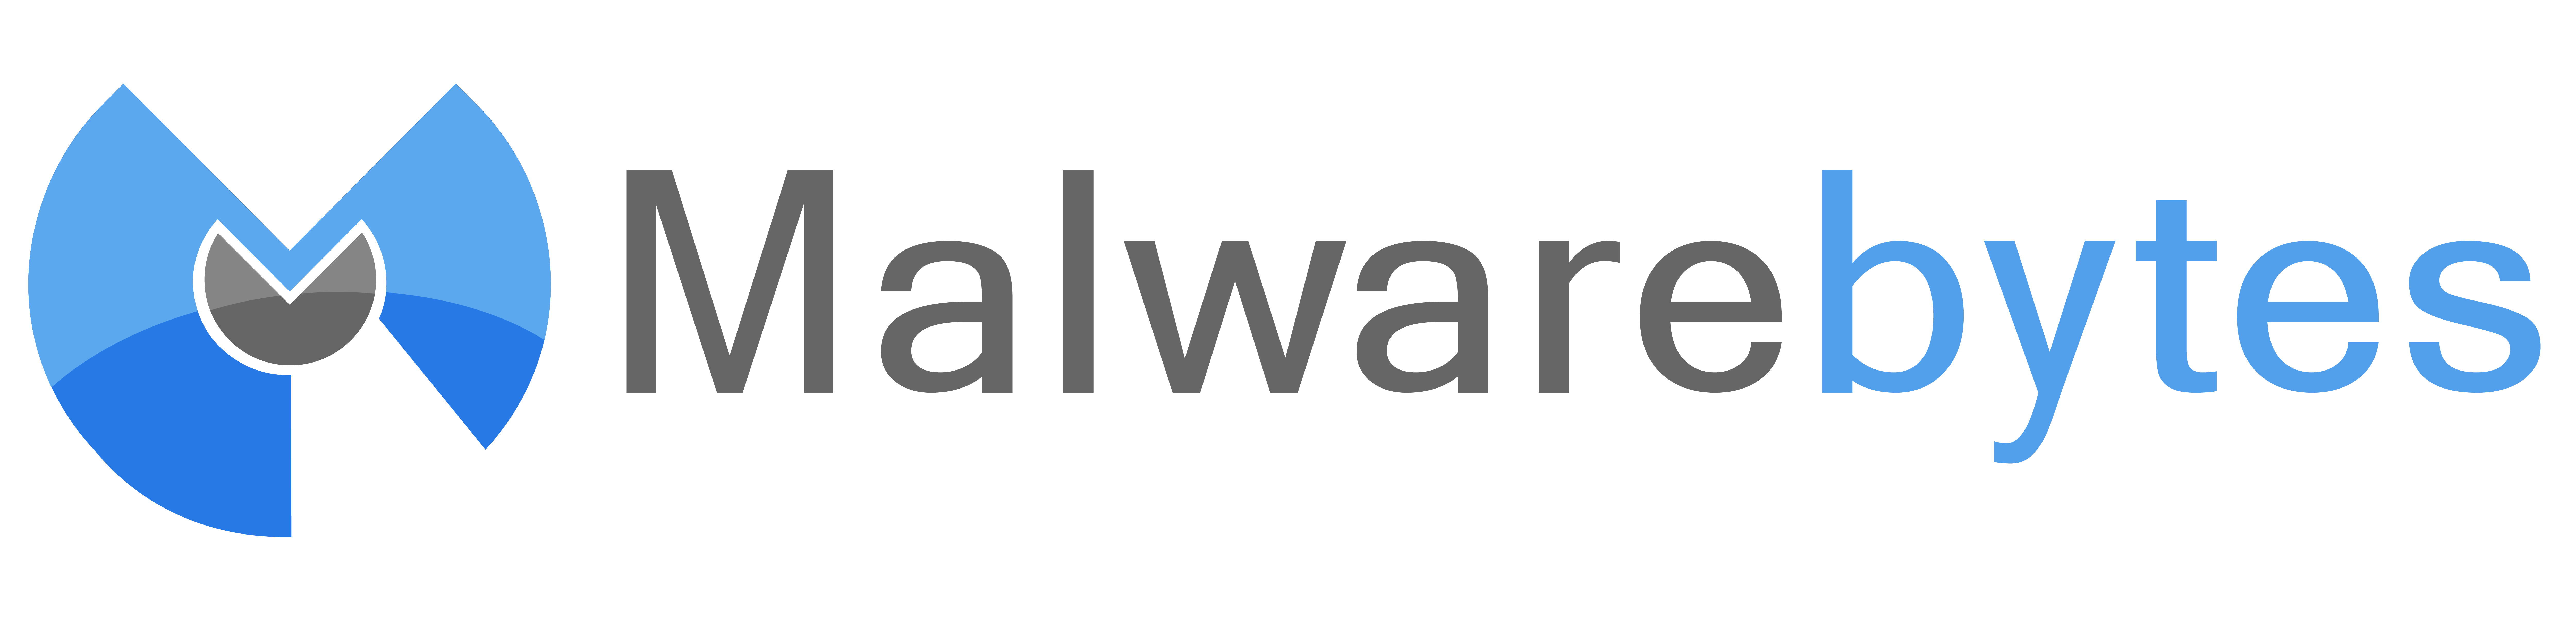 malwarebytes anti-malware download.cnet.com